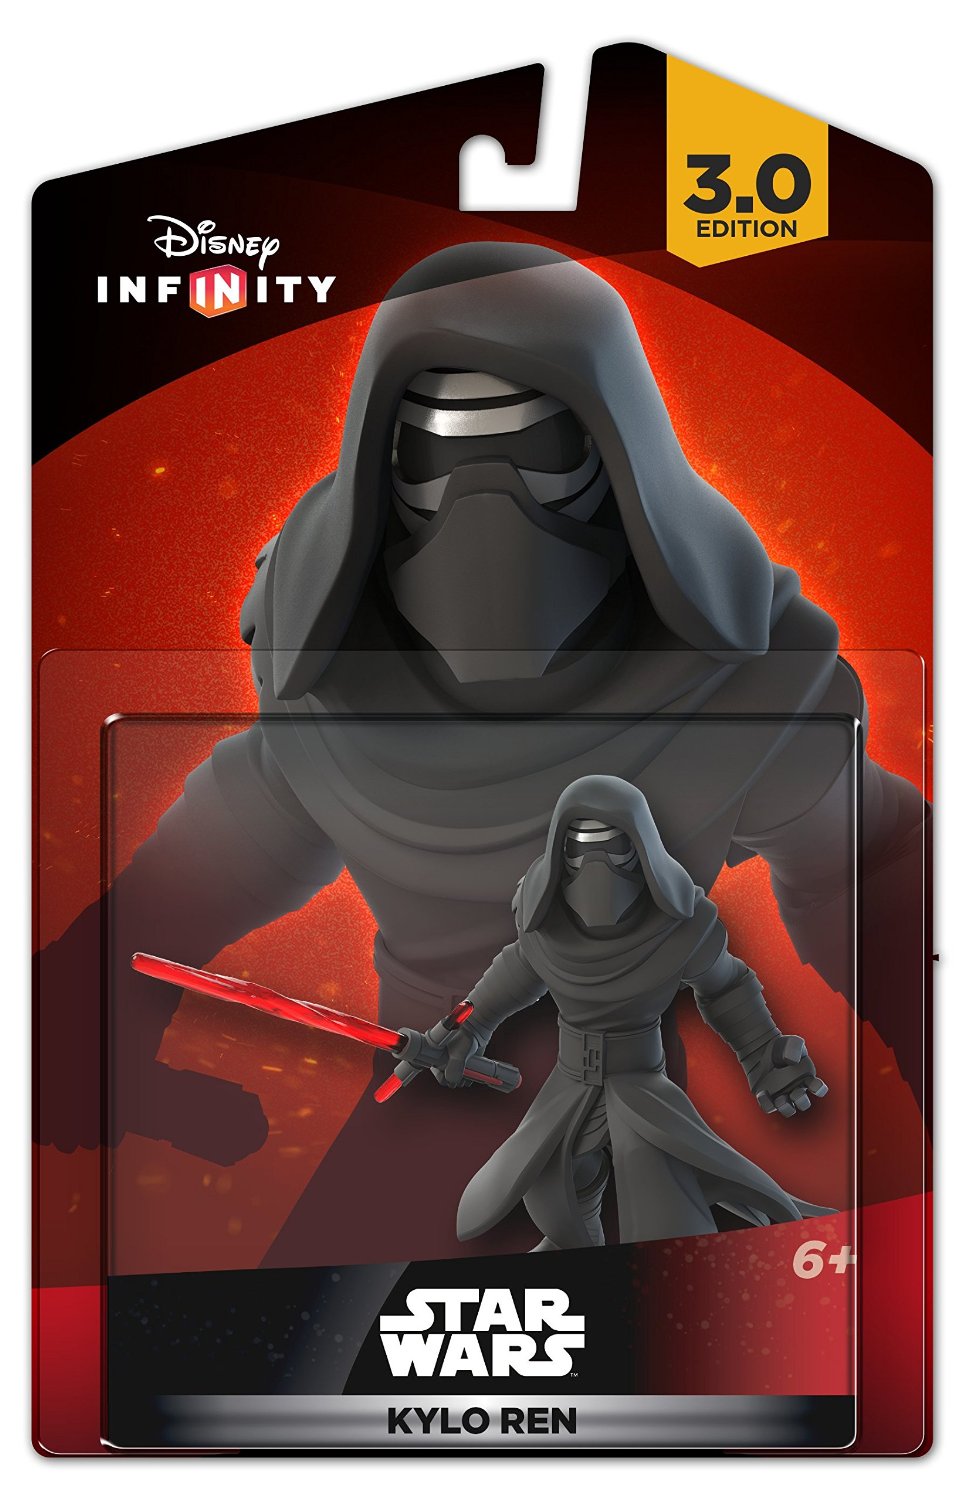 Disney Infinity 3.0 Edition: Star Wars The Force Awakens Kylo Ren Figure